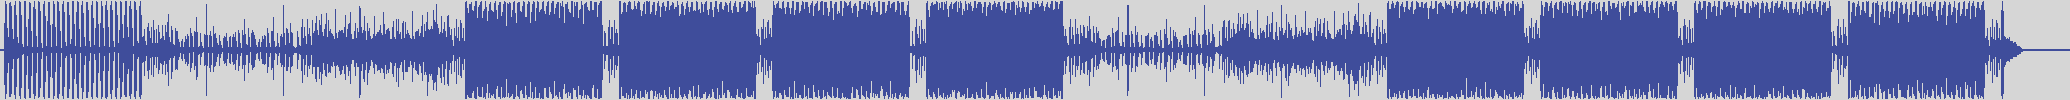 nf_boyz_records [NFY048] Martin York - So C'Mon [Ingo Lassort Impulse Mix] audio wave form